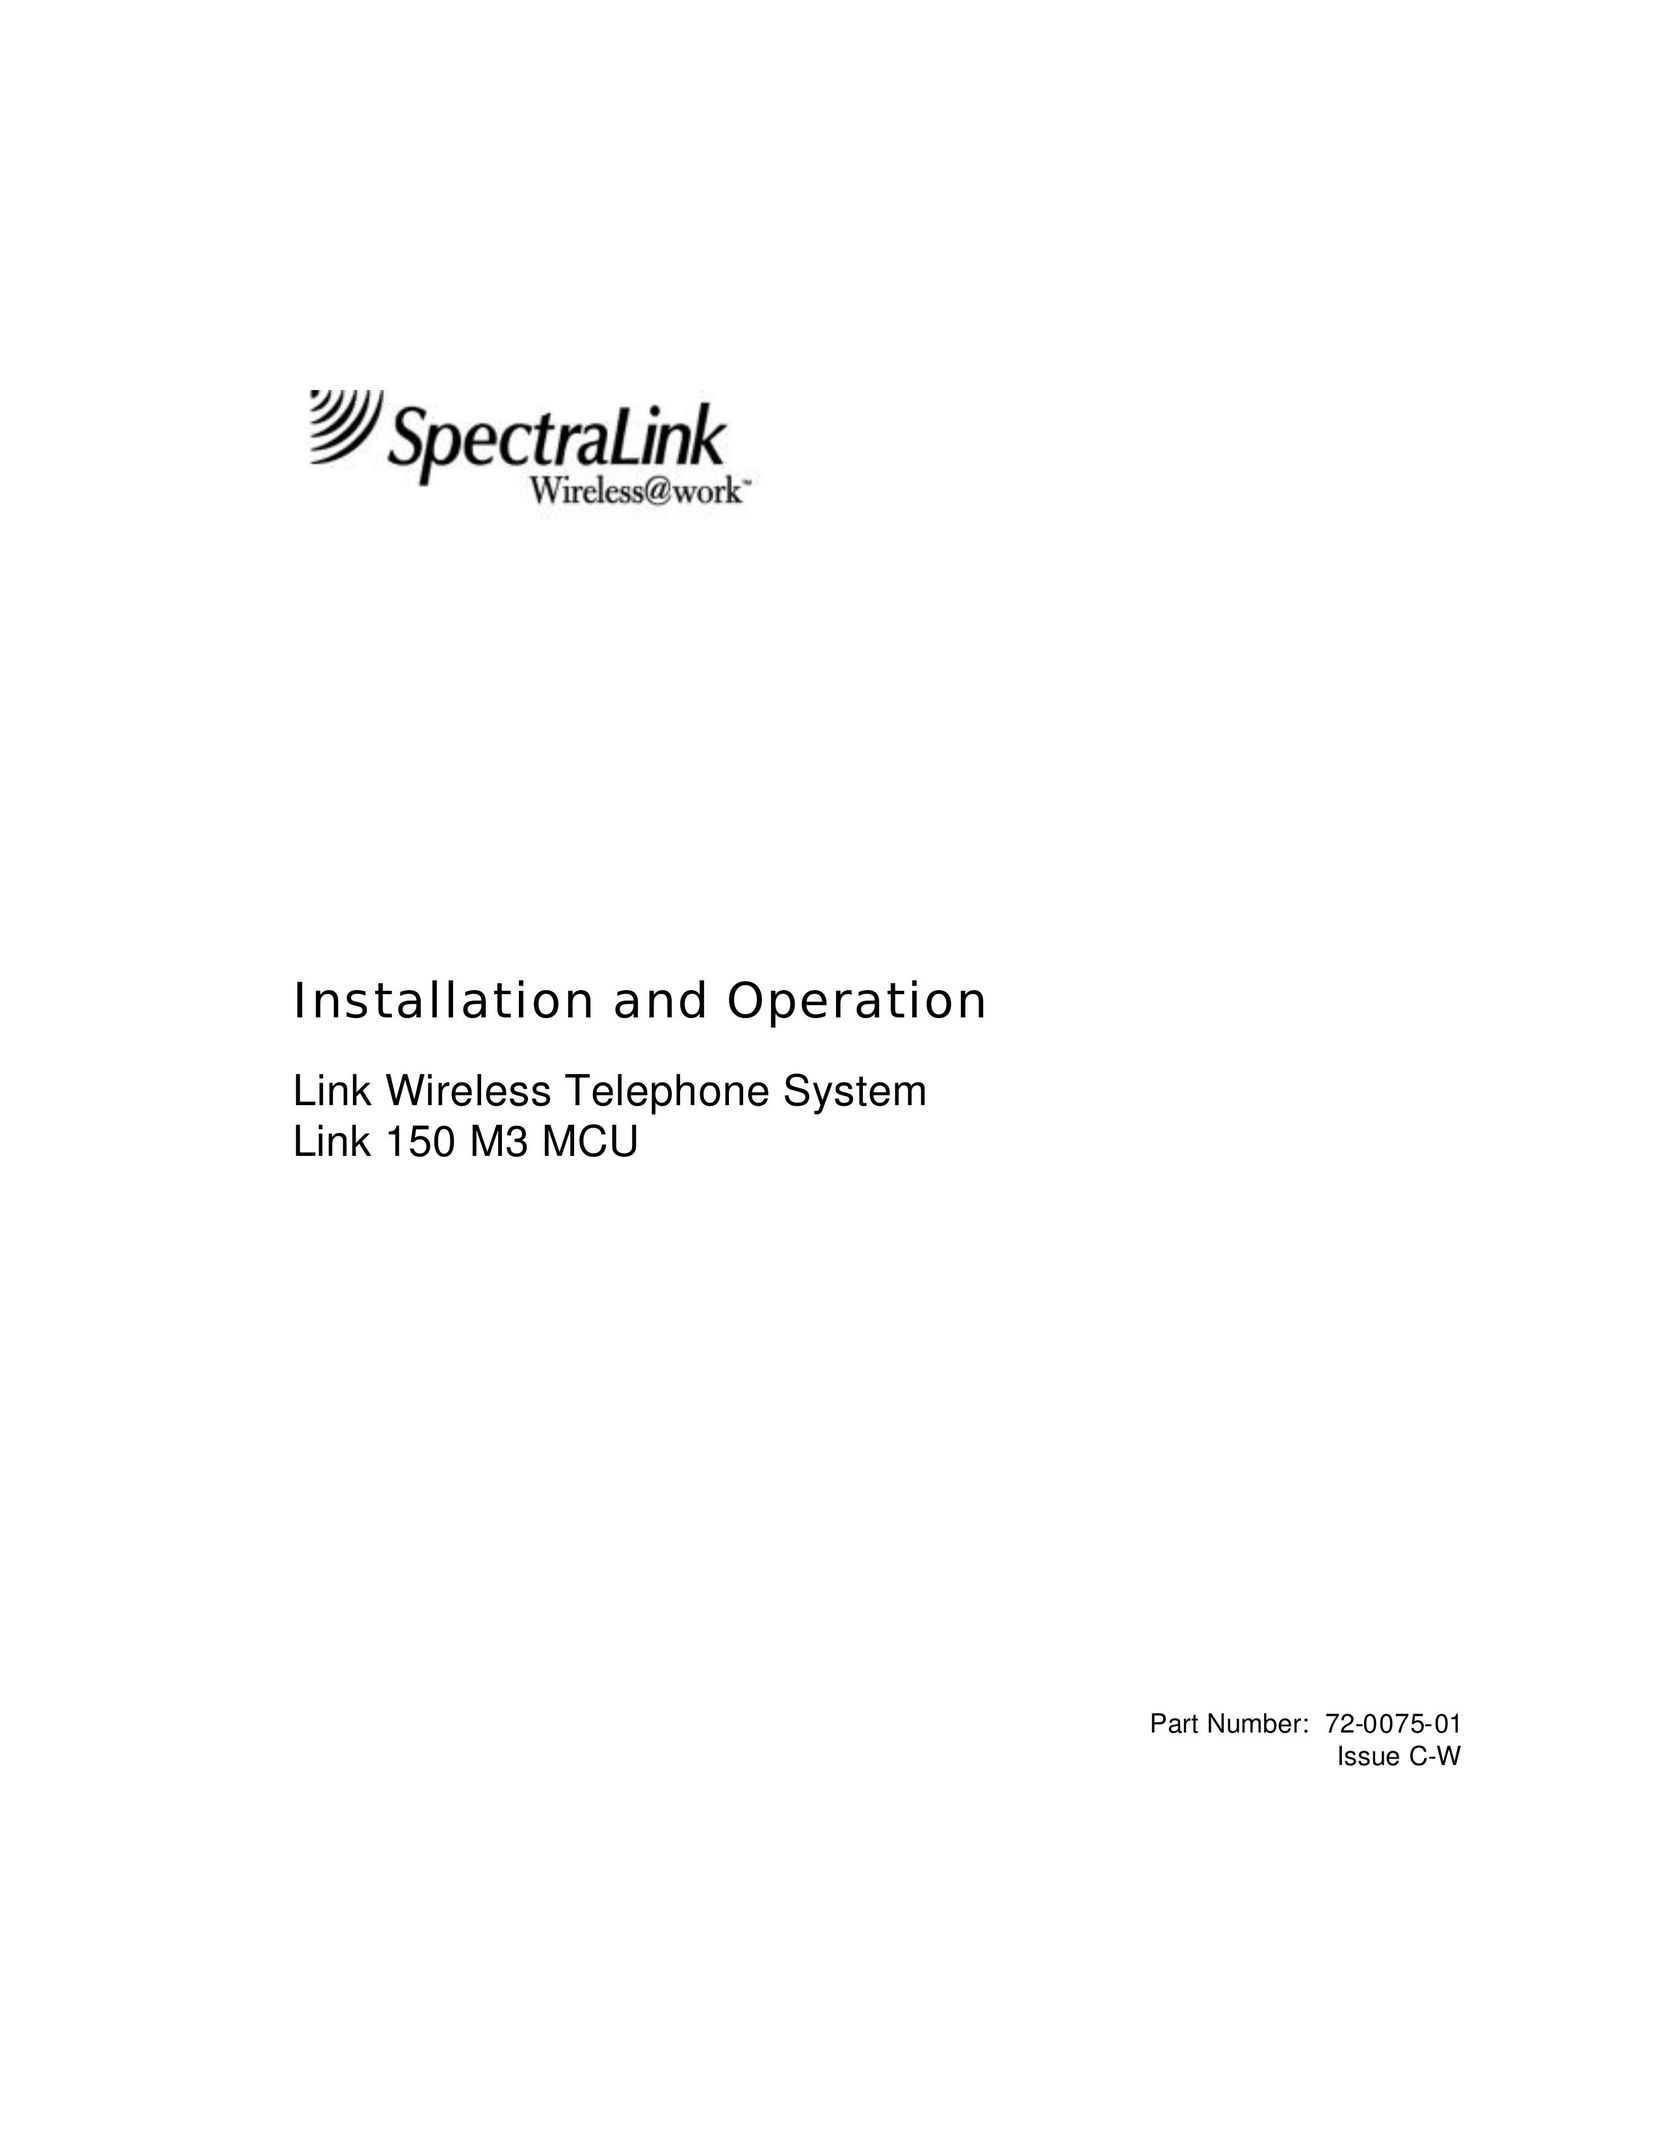 SpectraLink 150 M3 MCU Telephone User Manual